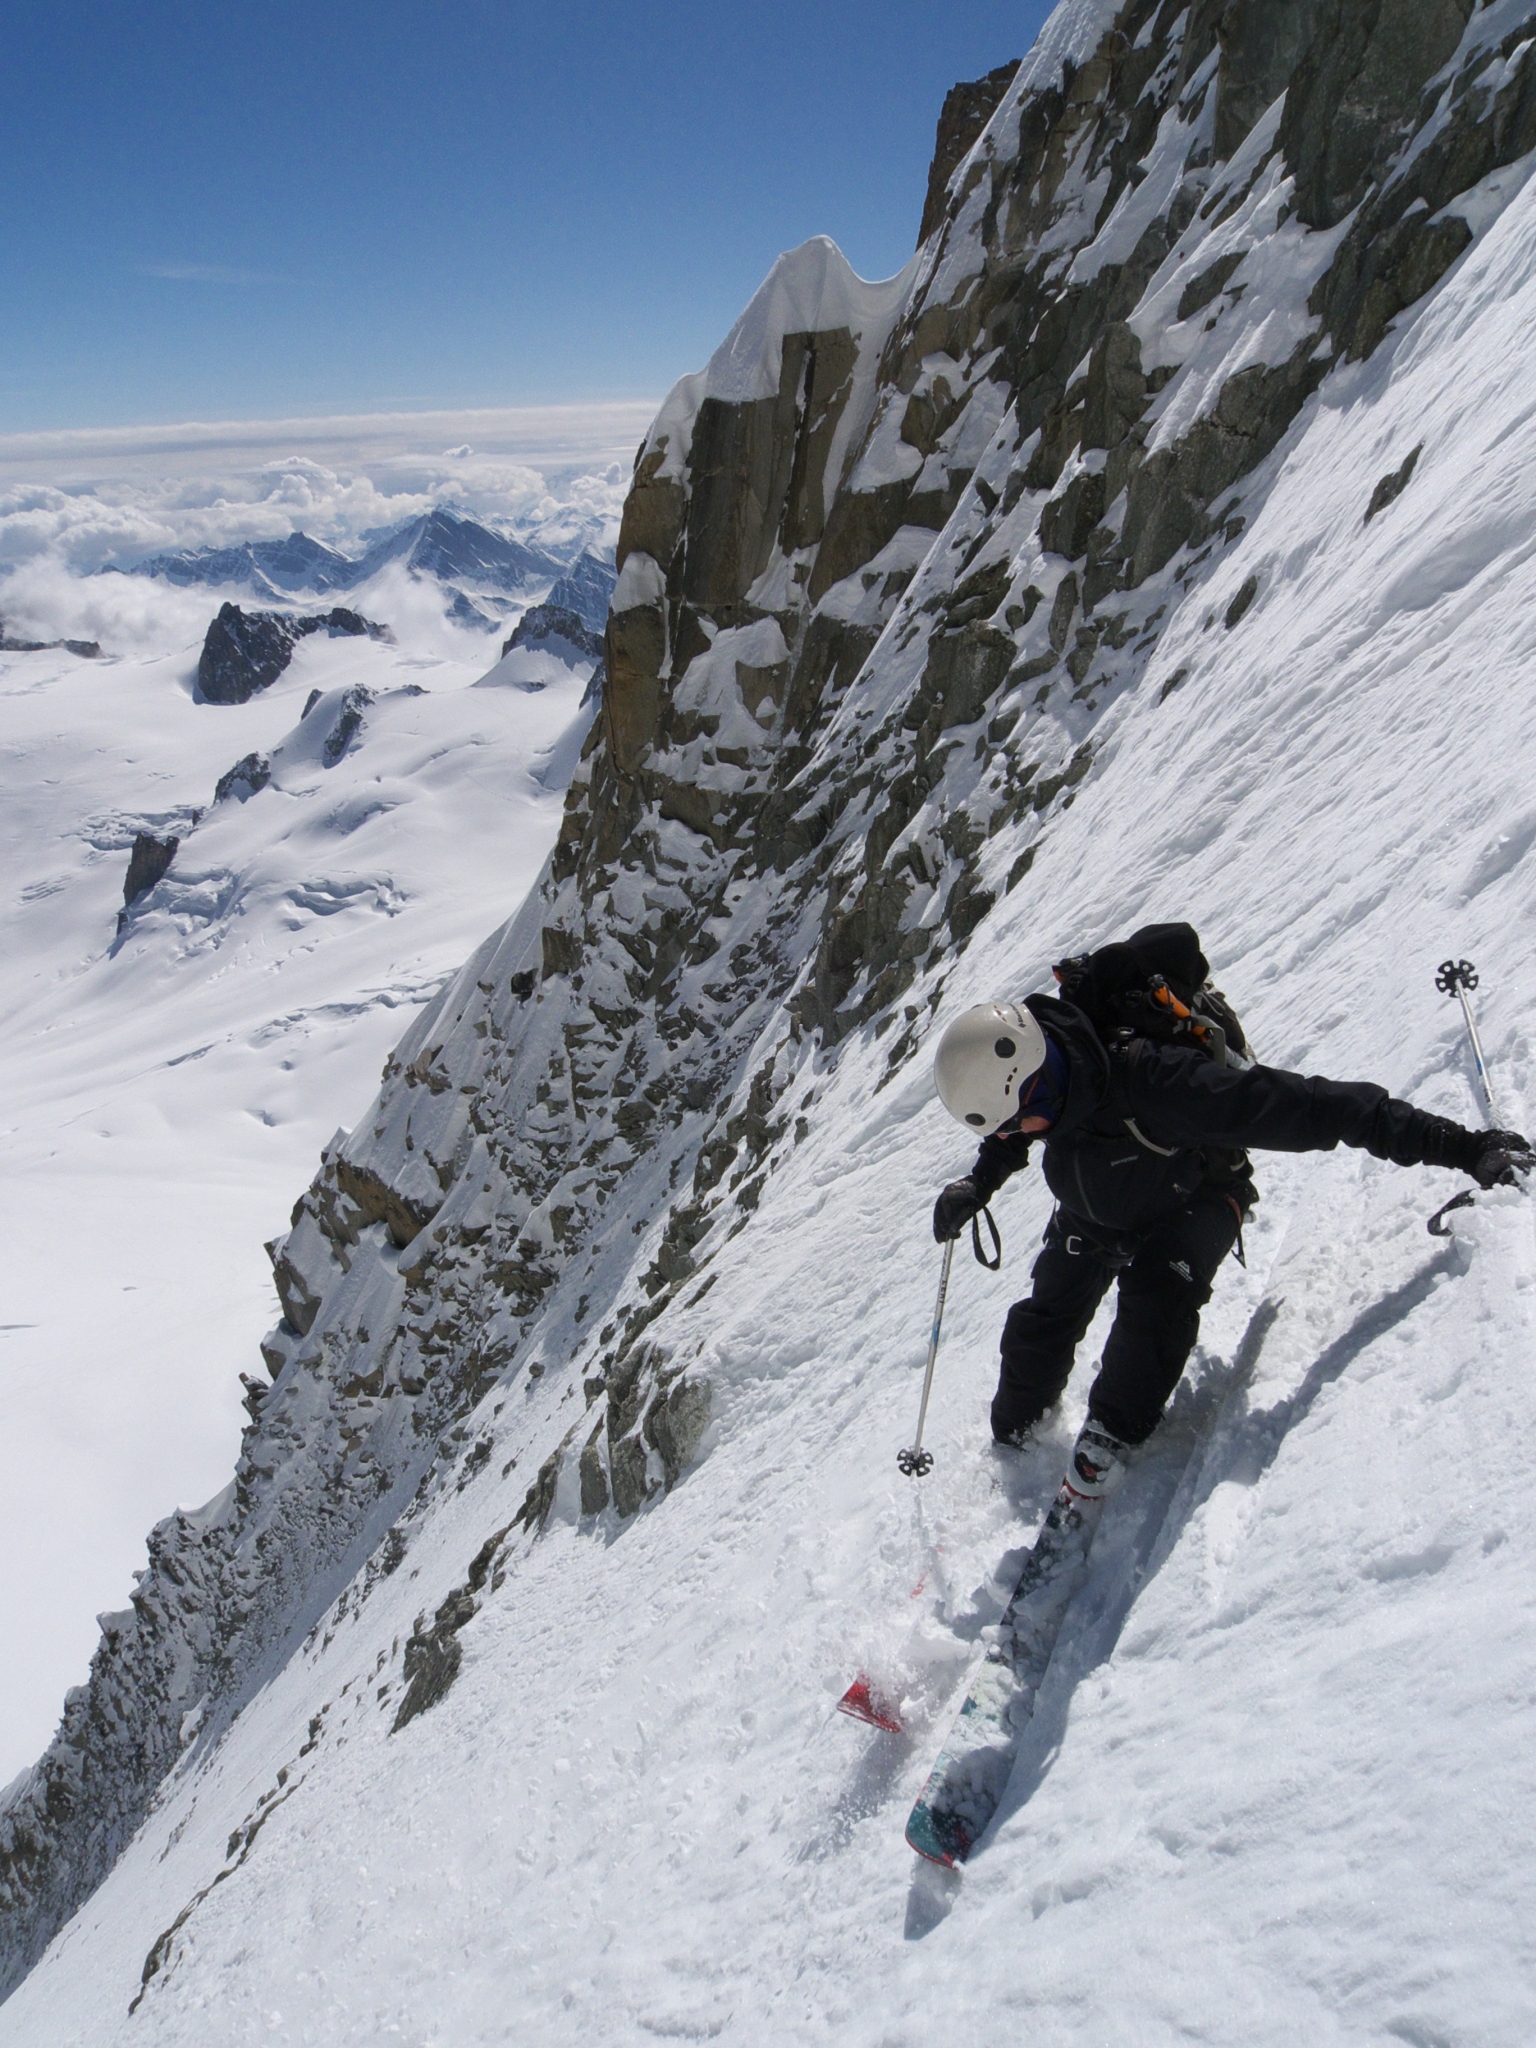 Mont_Blanc_du_Tacul_-_Couloir_Jager_-_Ski_descent.jpg